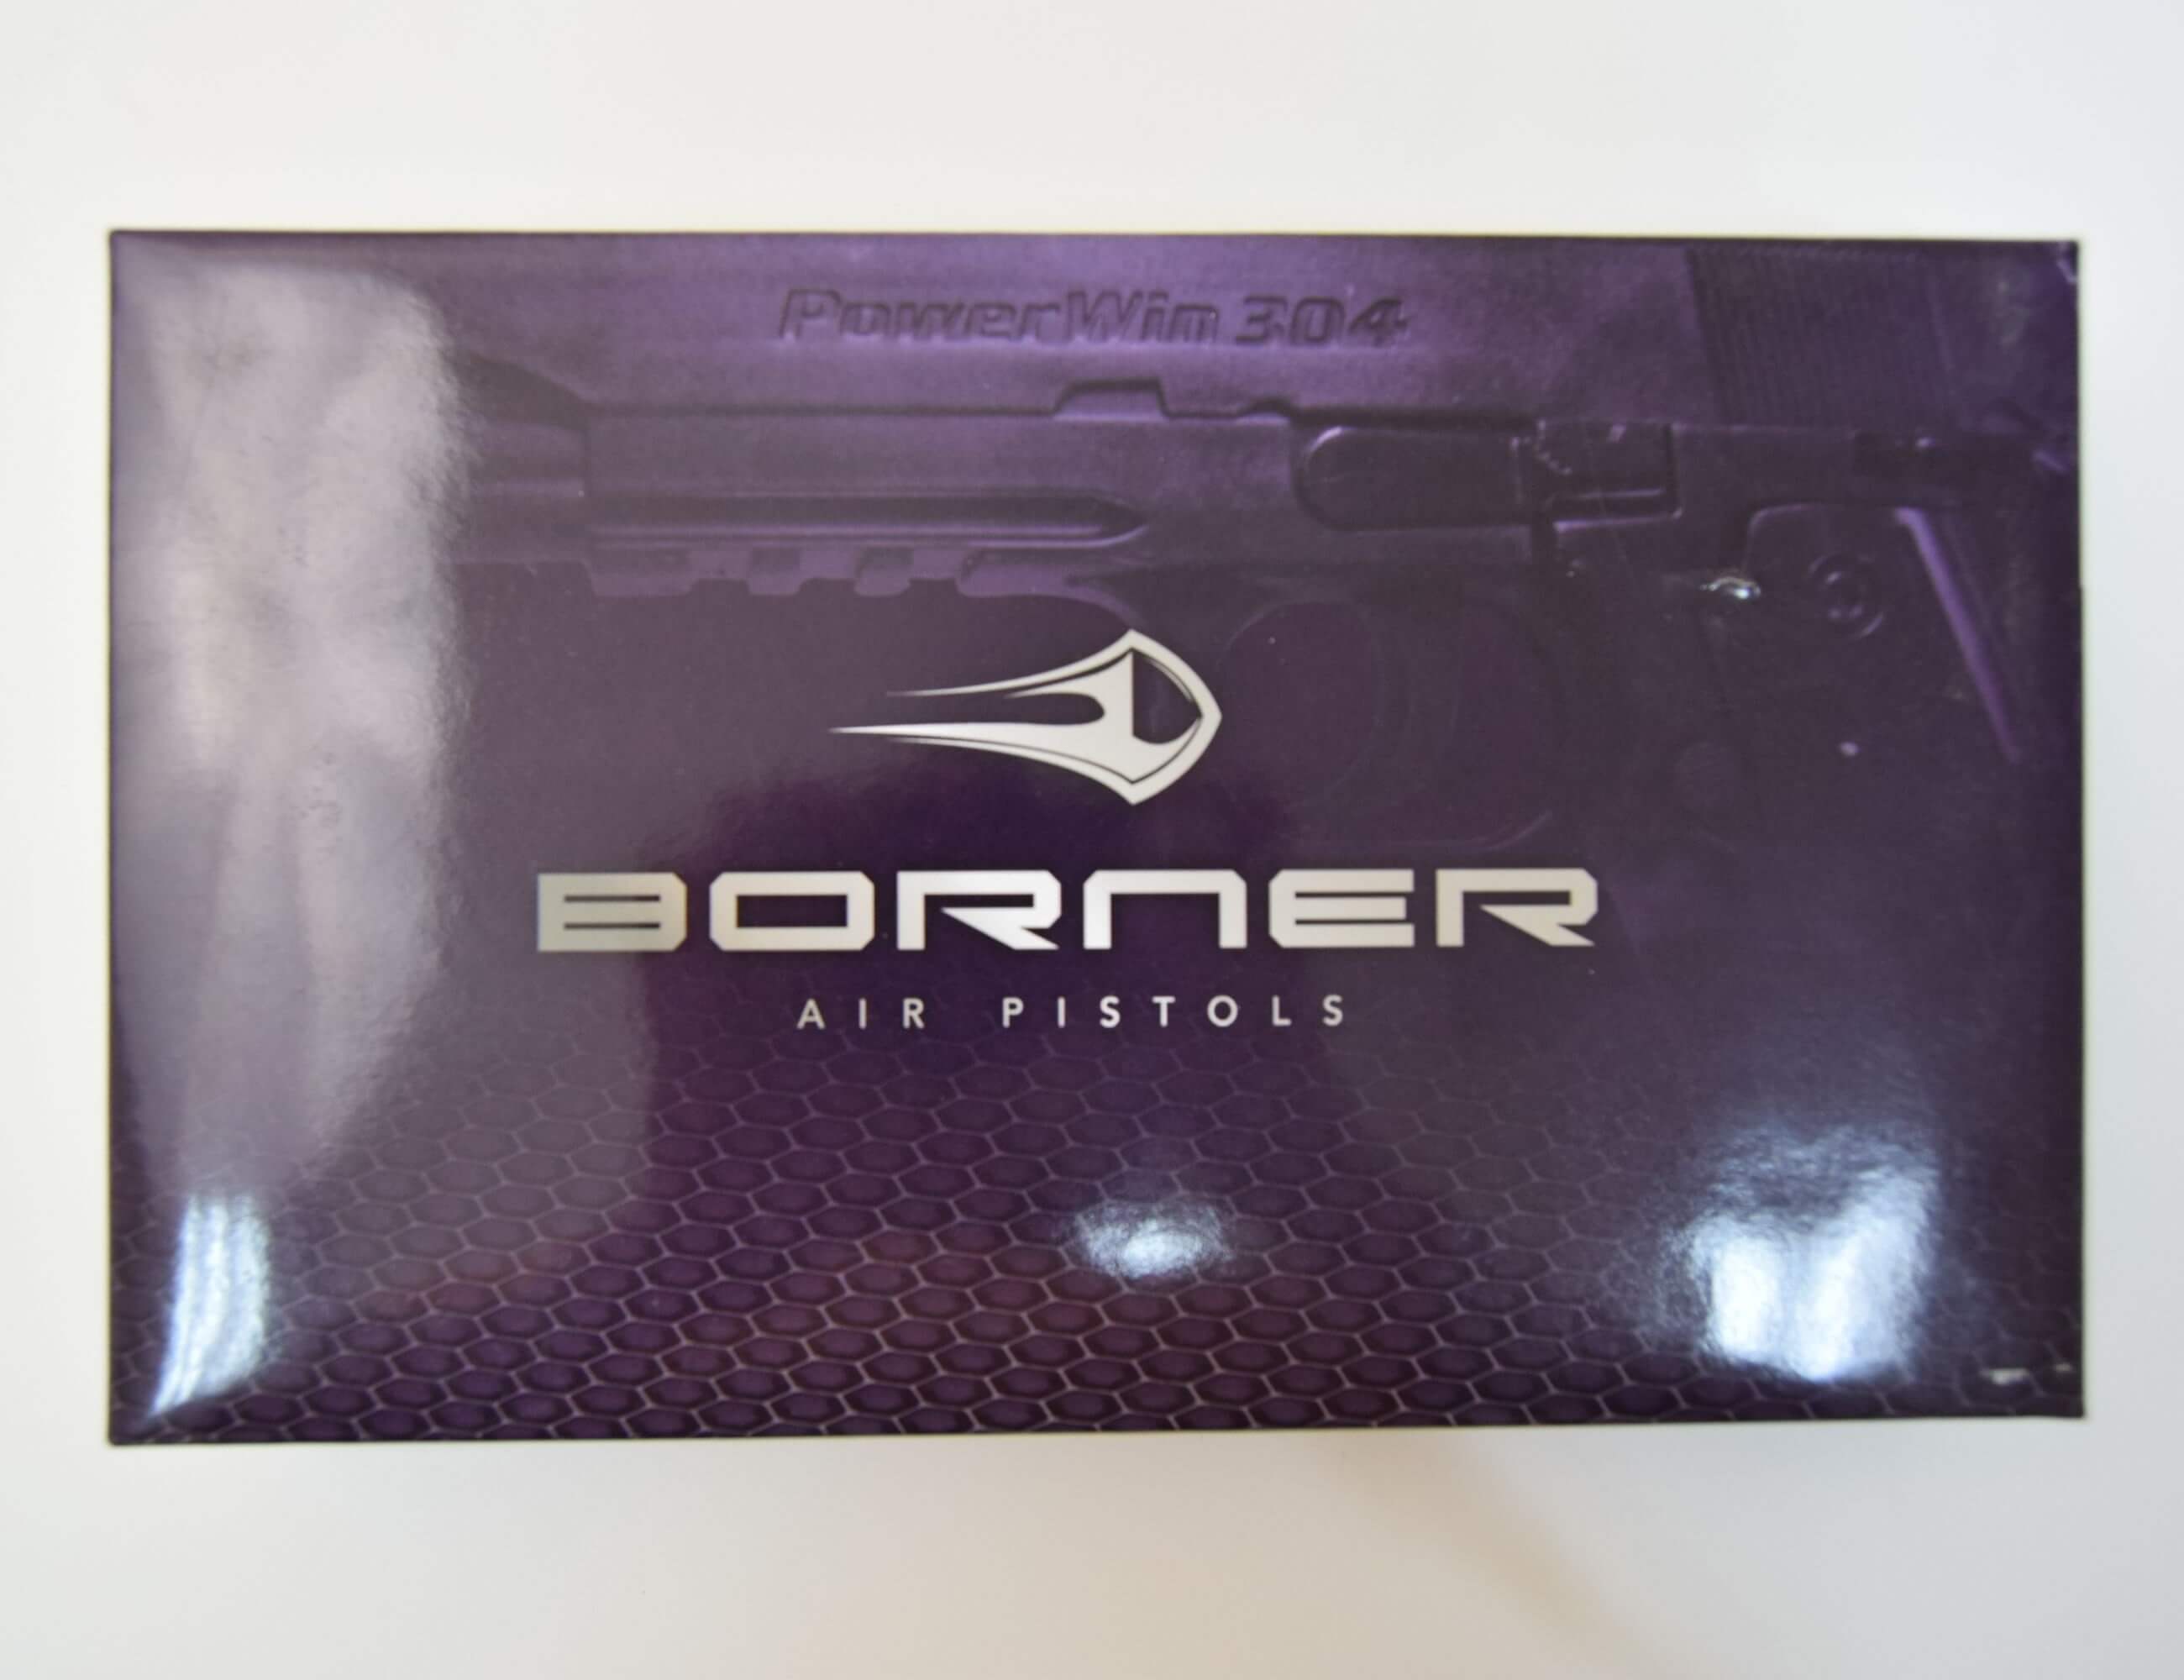 Пневматический пистолет Borner Power Win 304 4,5 мм